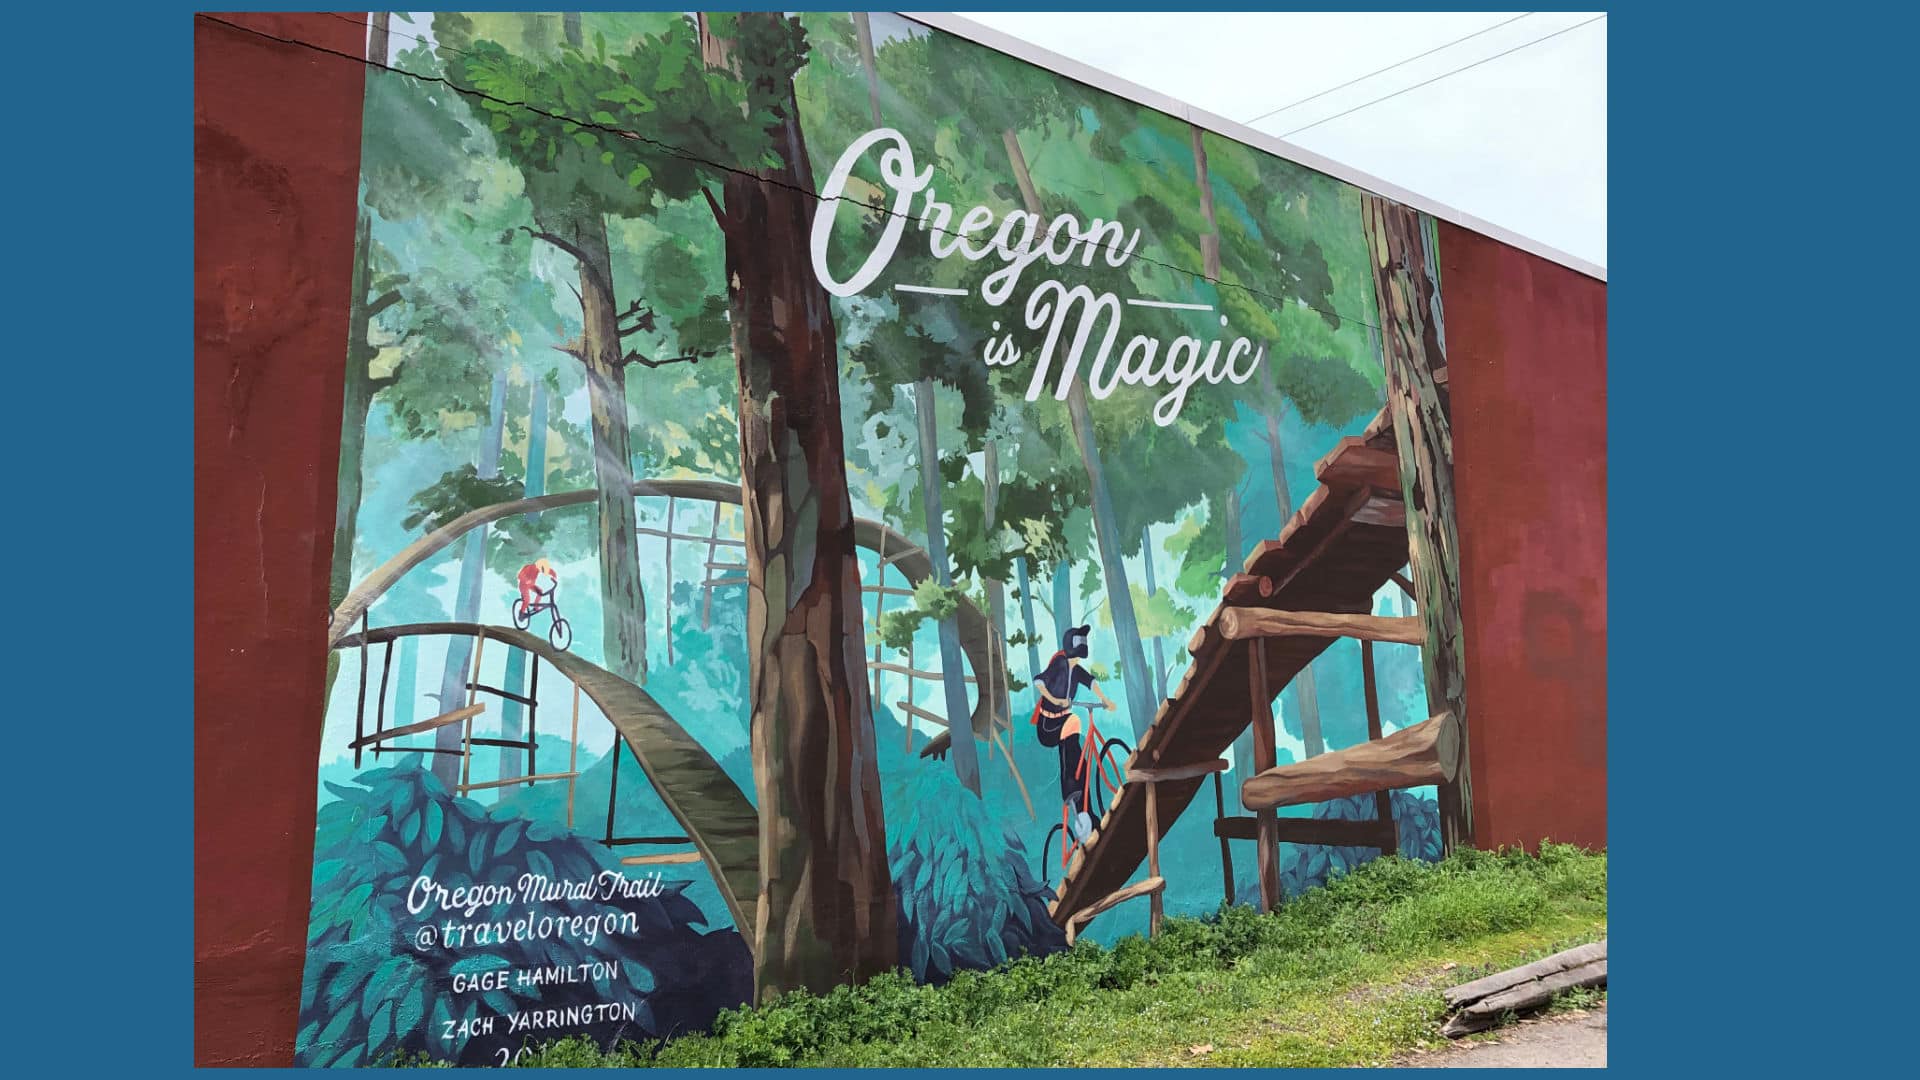 Oakridge Oregon Is Magic Mural on the Oregon Mural Trail